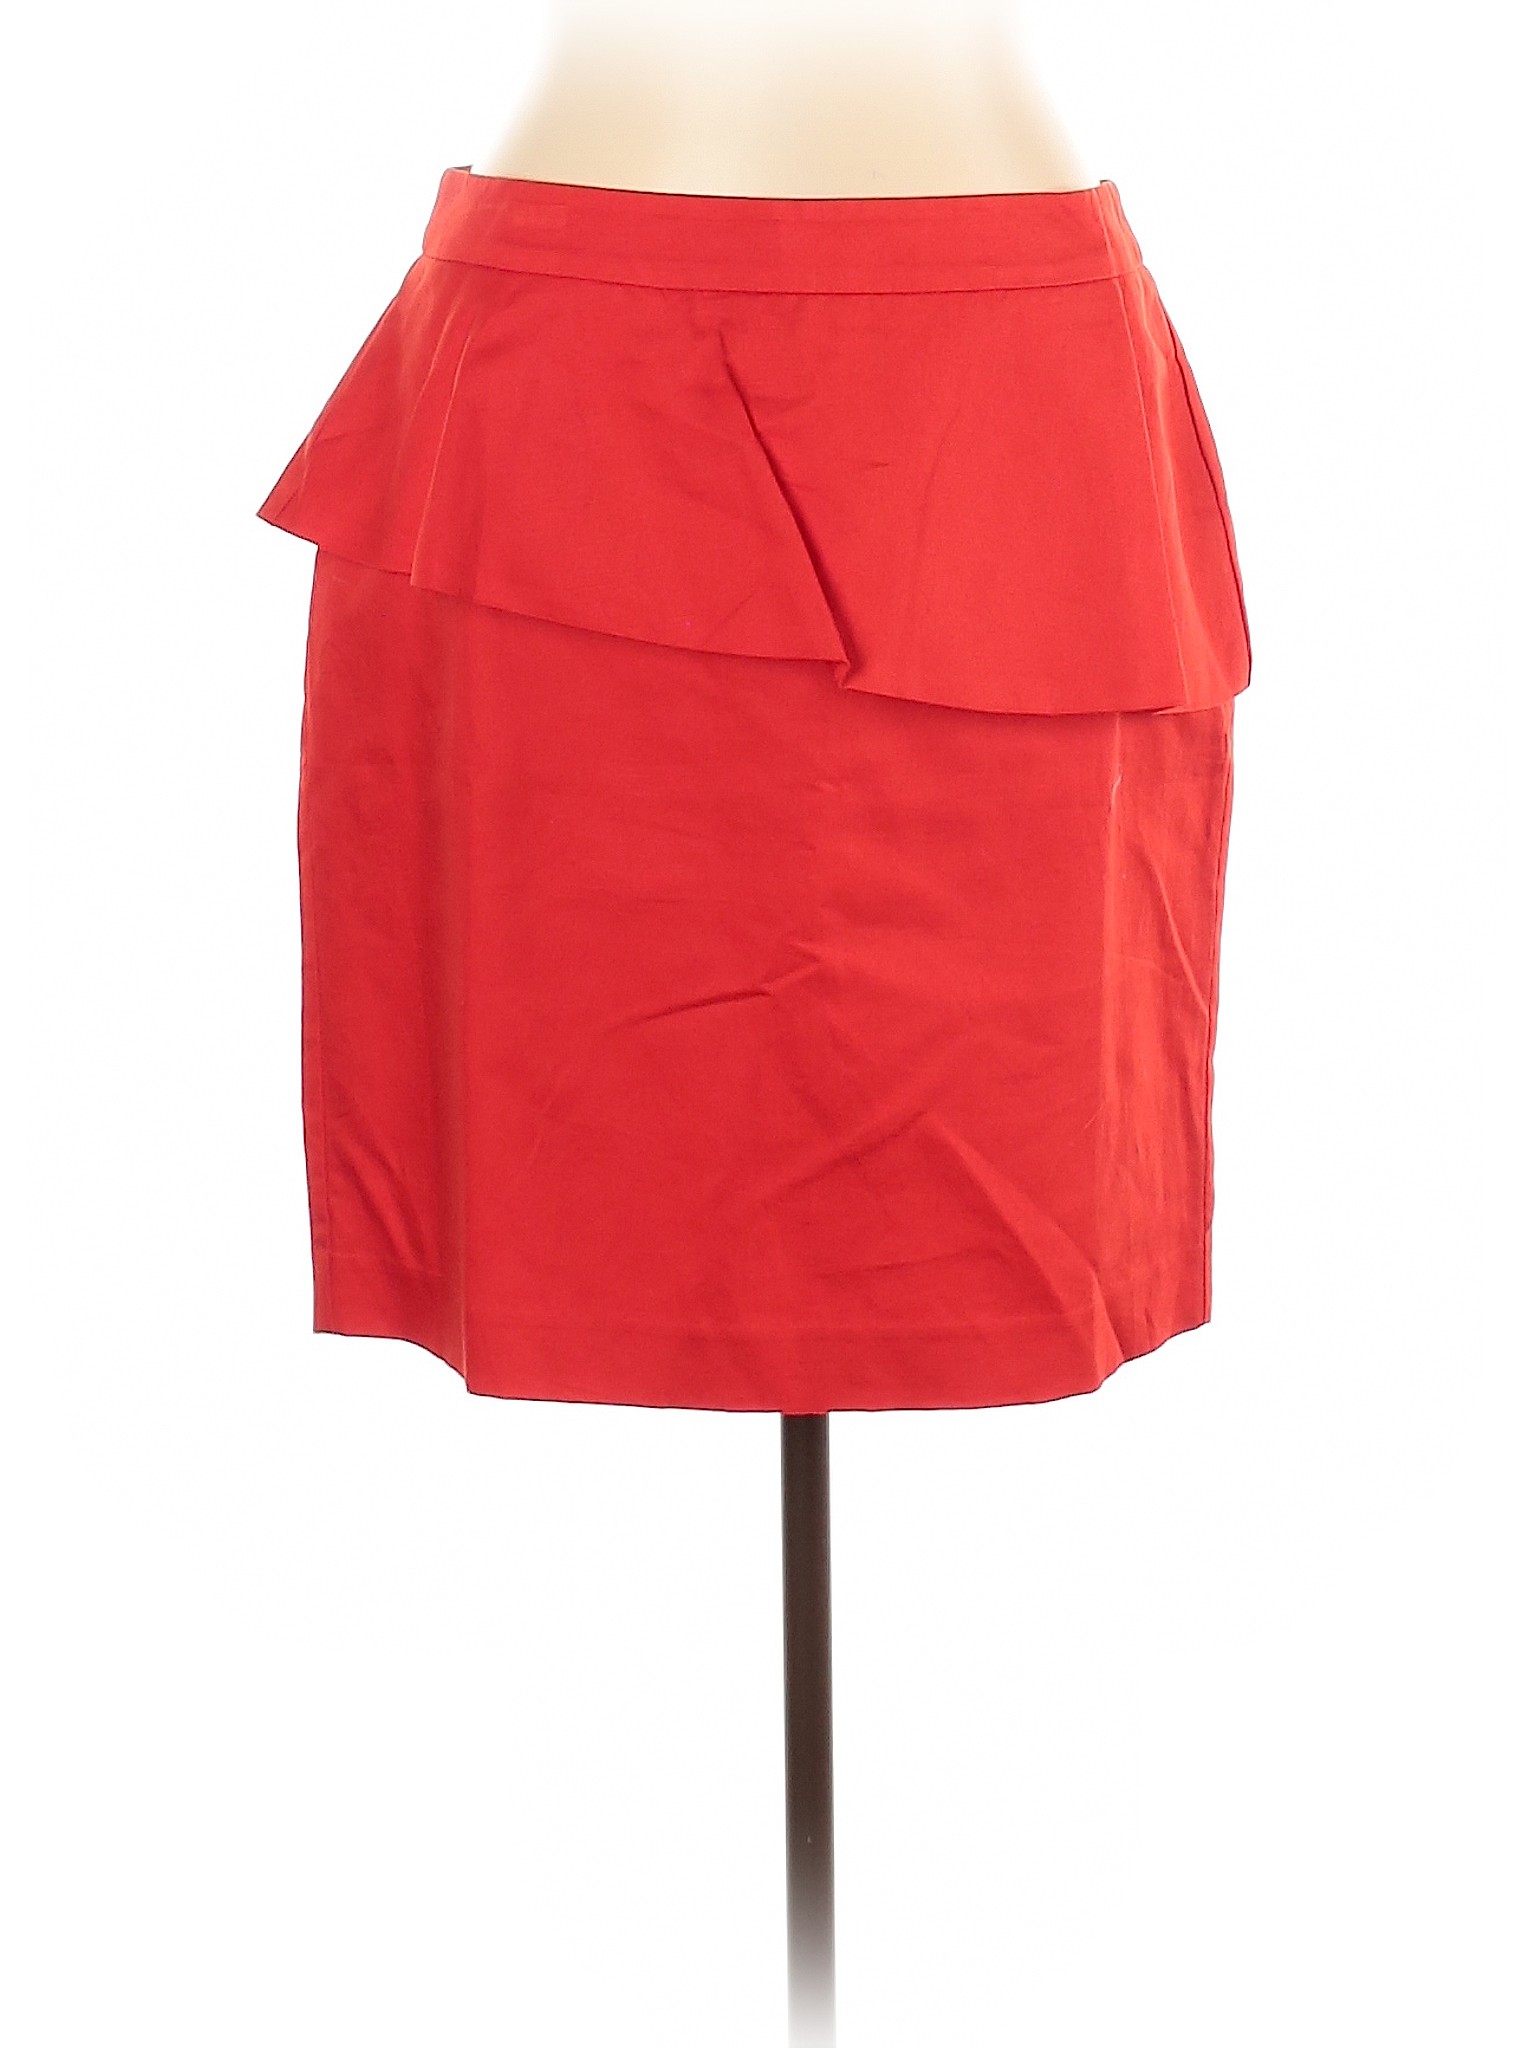 NWT Ann Taylor LOFT Outlet Women Red Casual Skirt 10 | eBay